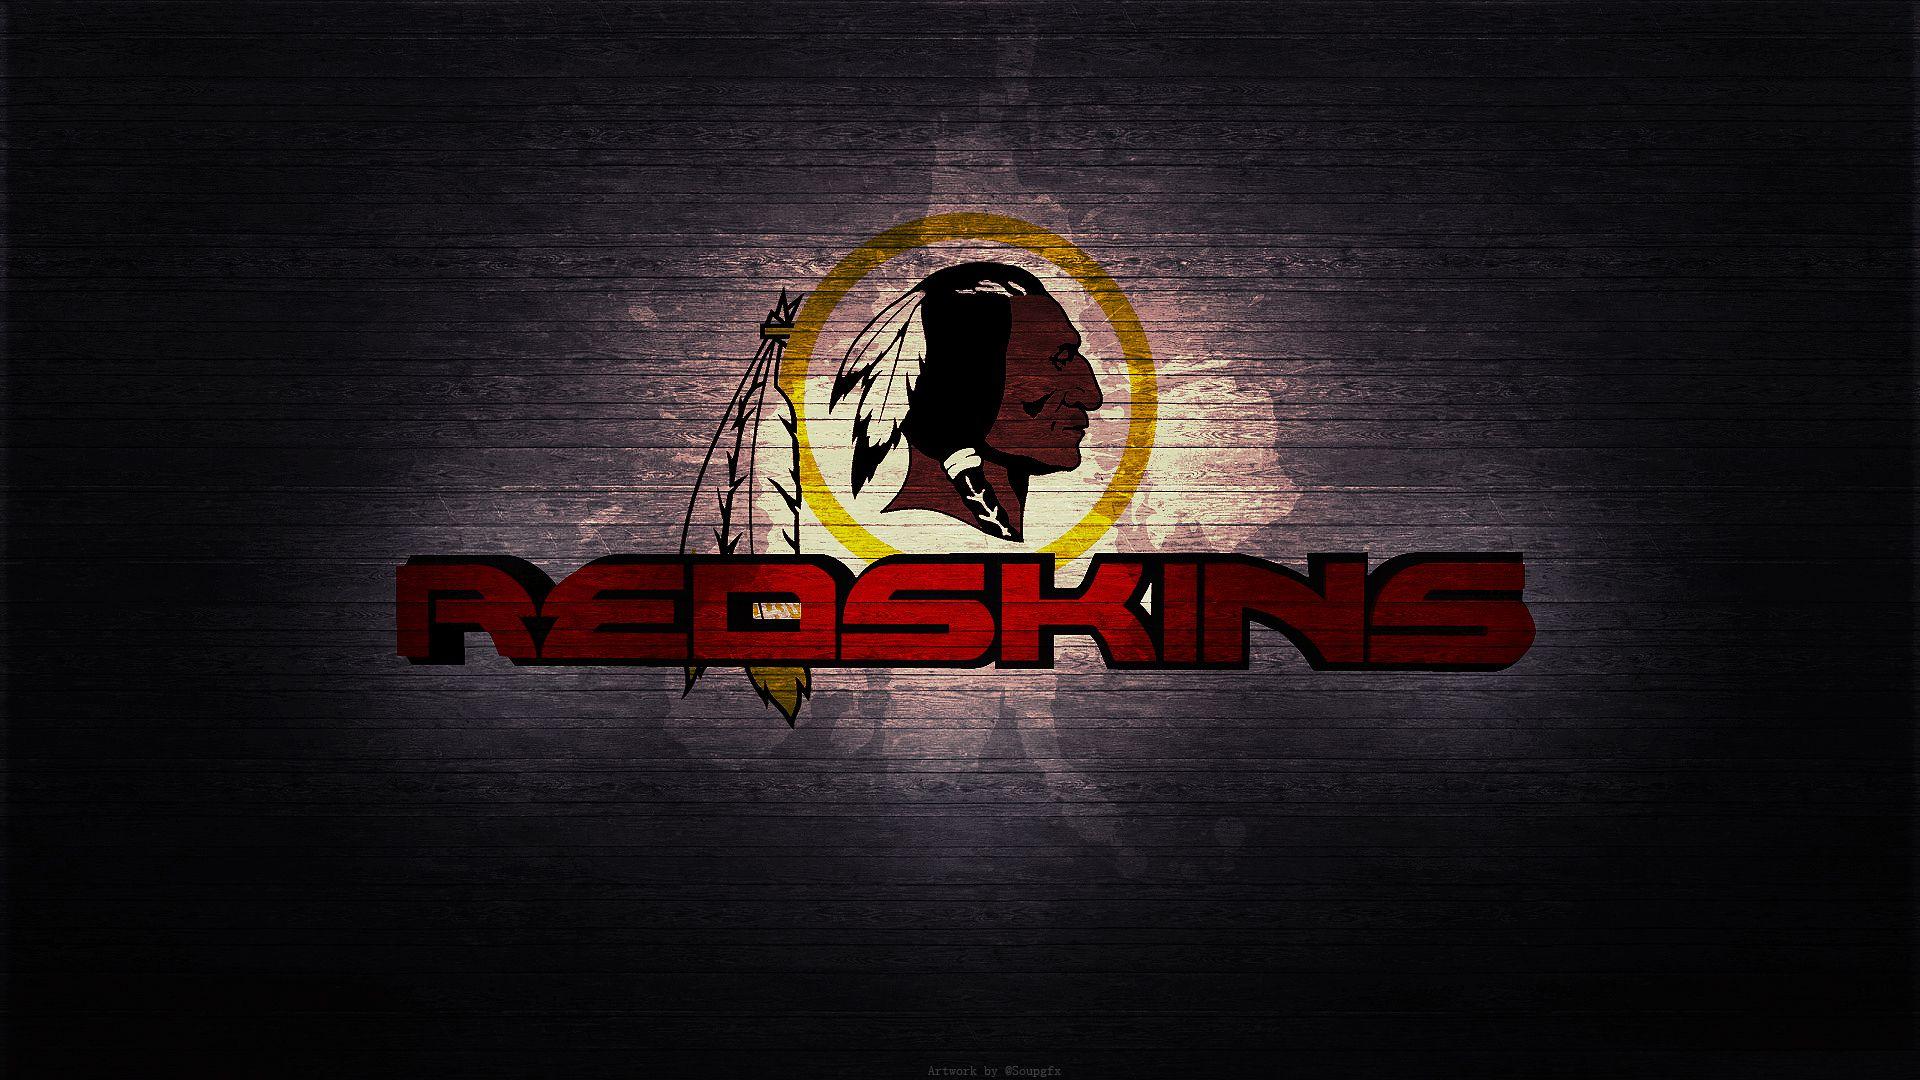 Redskins Wallpaper 14553 1920x1080 px